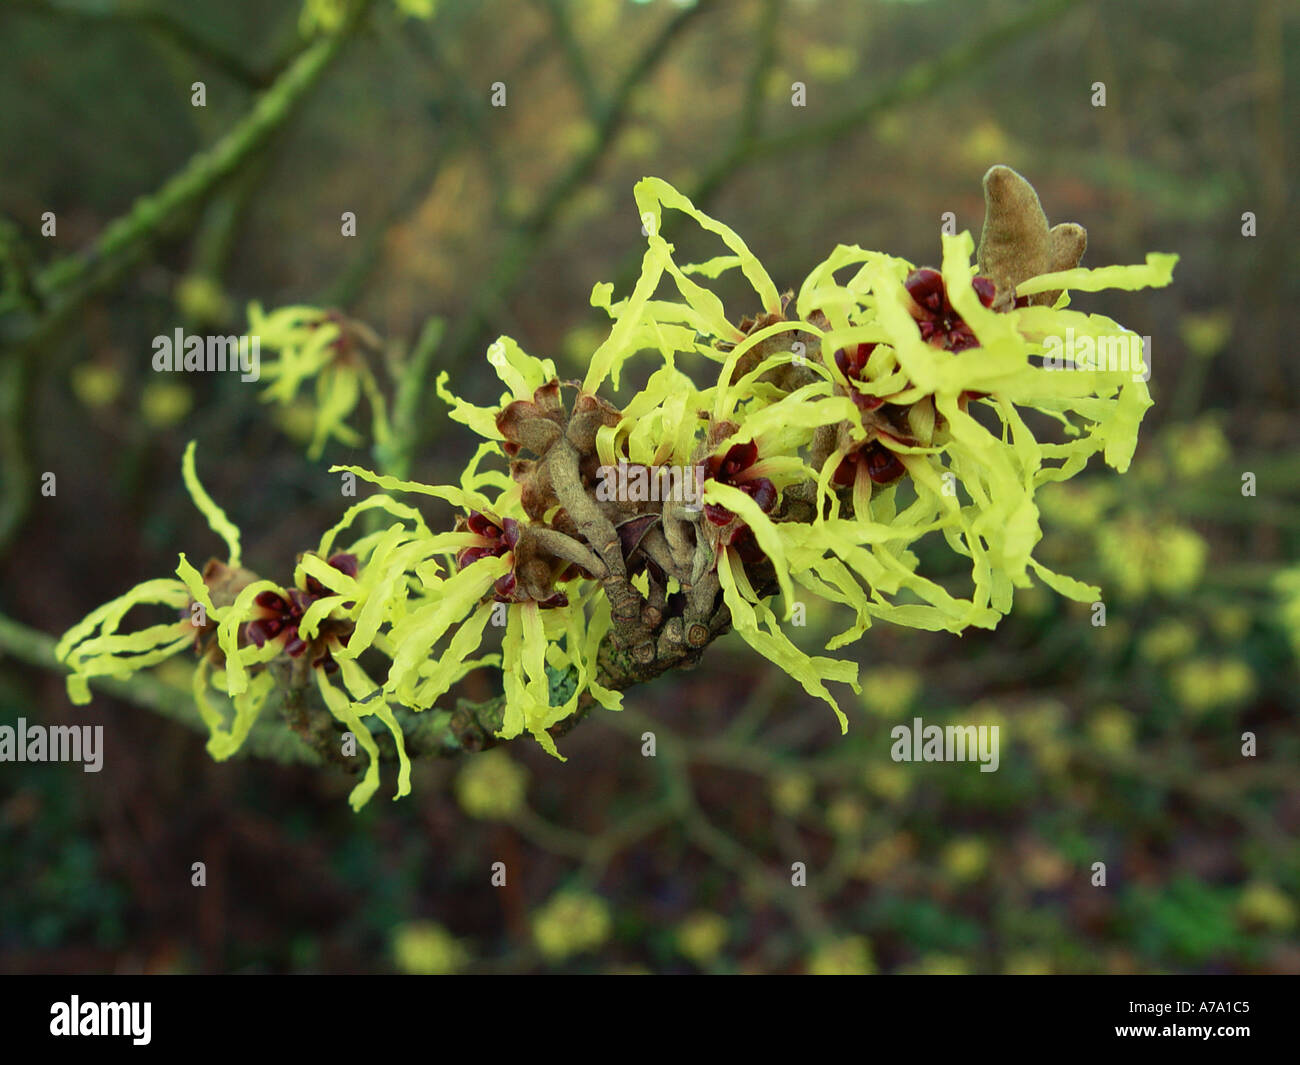 Hamamelis x intermedia Pallida Stock Photo - Alamy